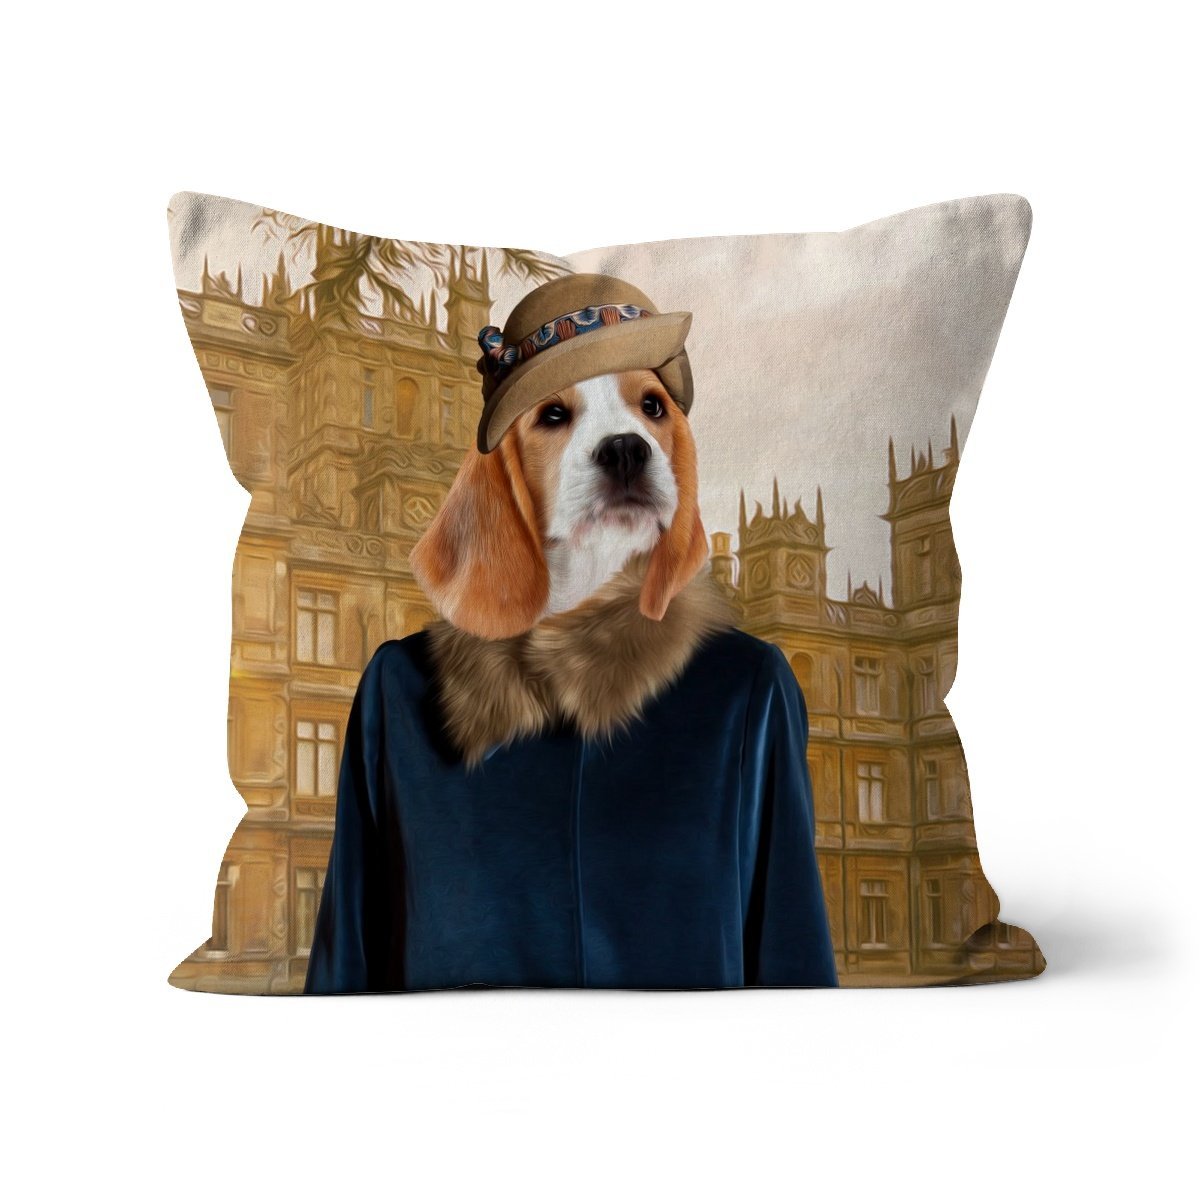 Lady Anne (Downton Abbey Inspired): Custom Pet Cushion - Paw & Glory - #pet portraits# - #dog portraits# - #pet portraits uk#paw and glory, custom pet portrait cushion,custom pillow of your pet, dog personalized pillow, custom pillow cover, dog shaped pillows, dog pillows personalized